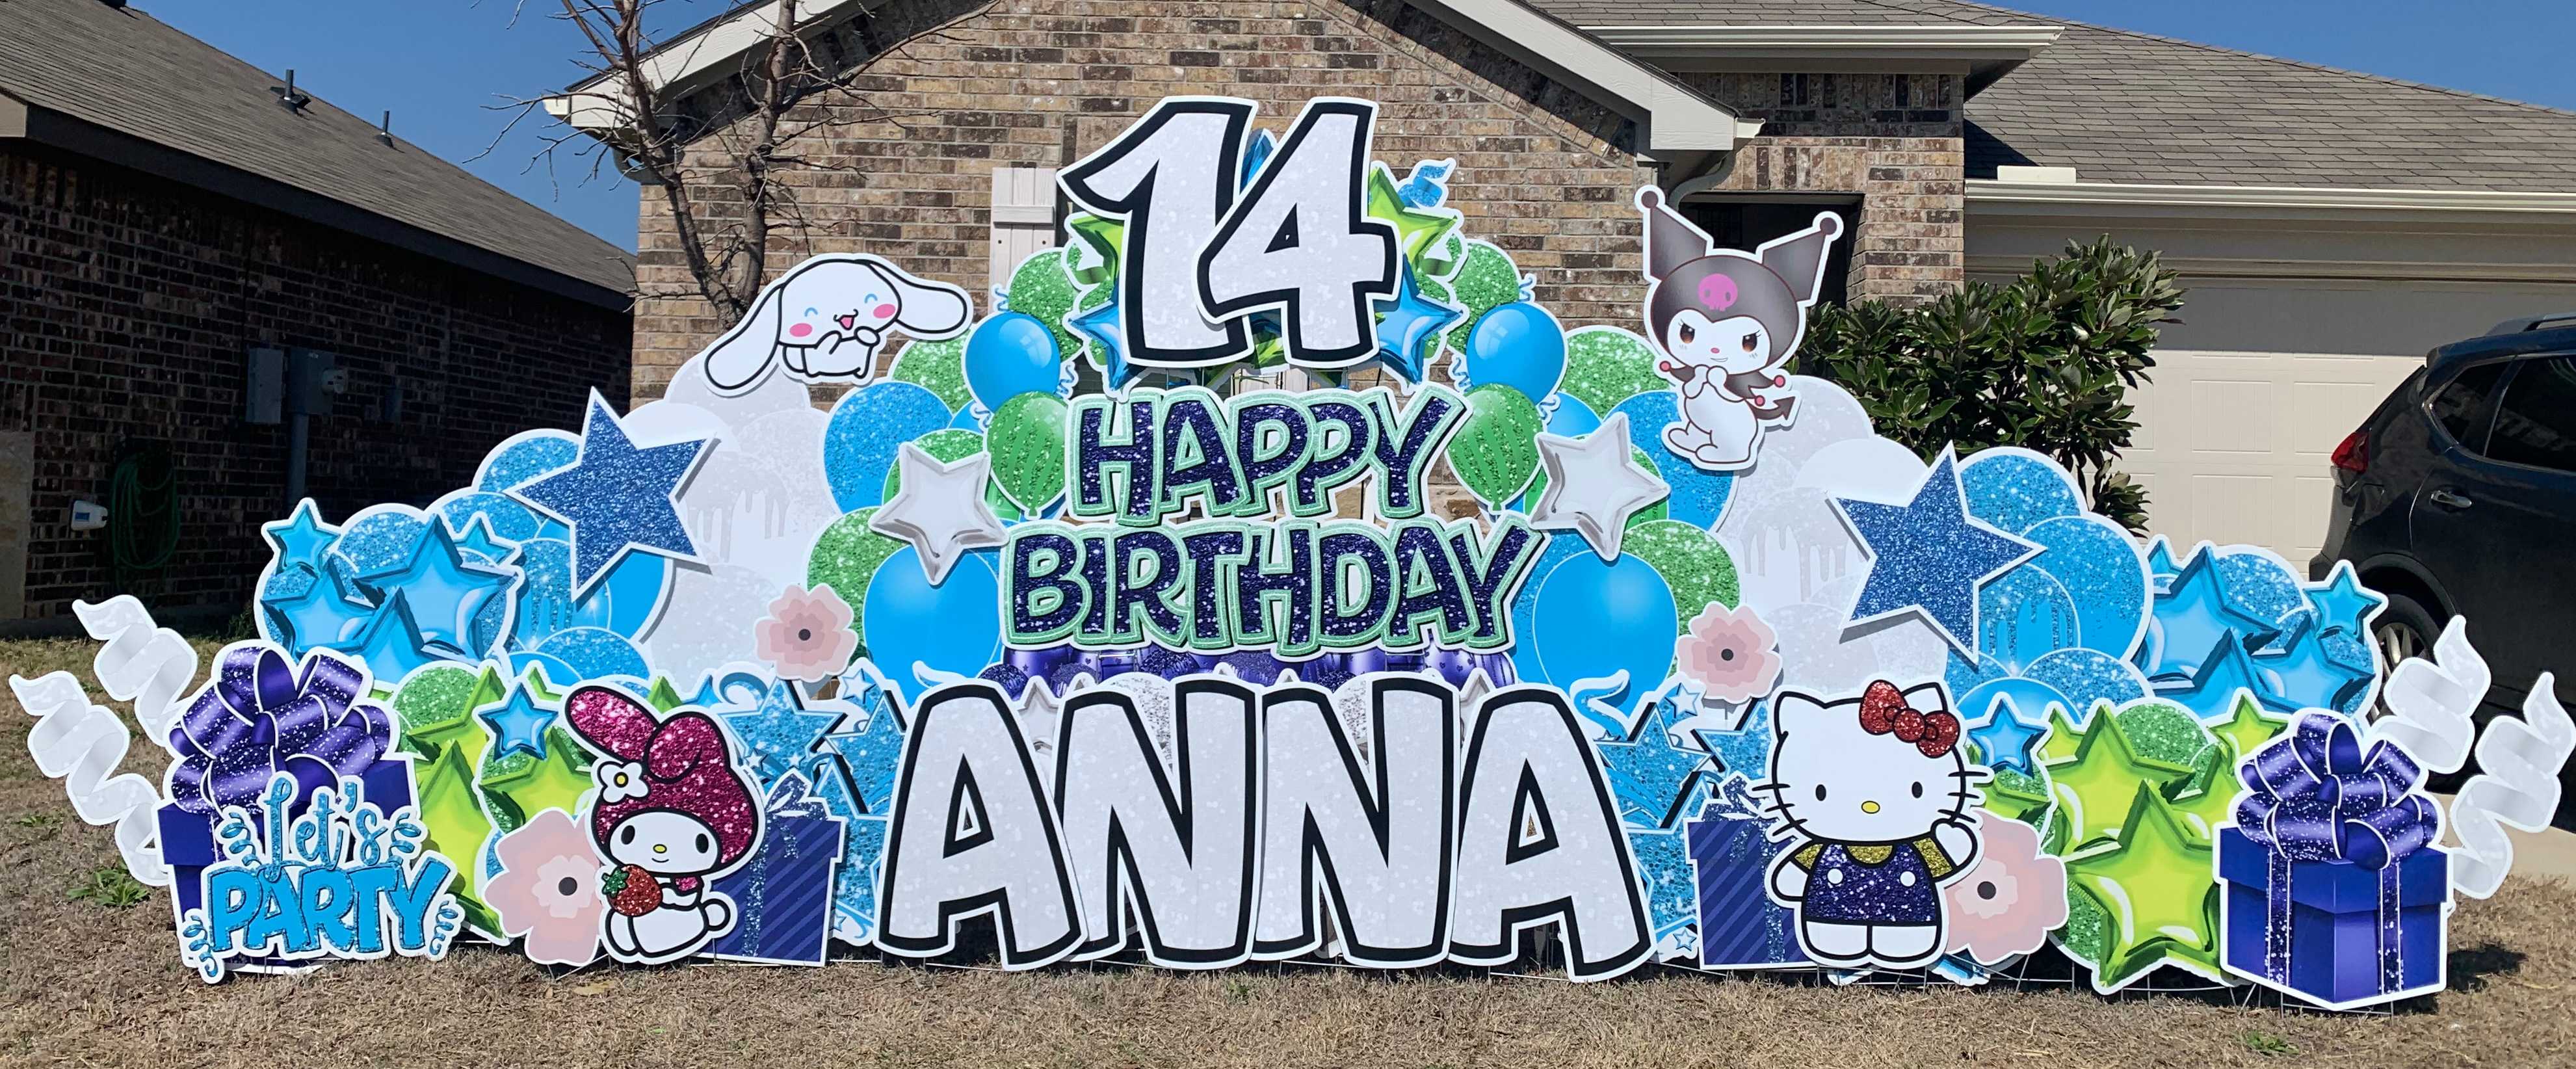 Yard card sign happy birthday anna 